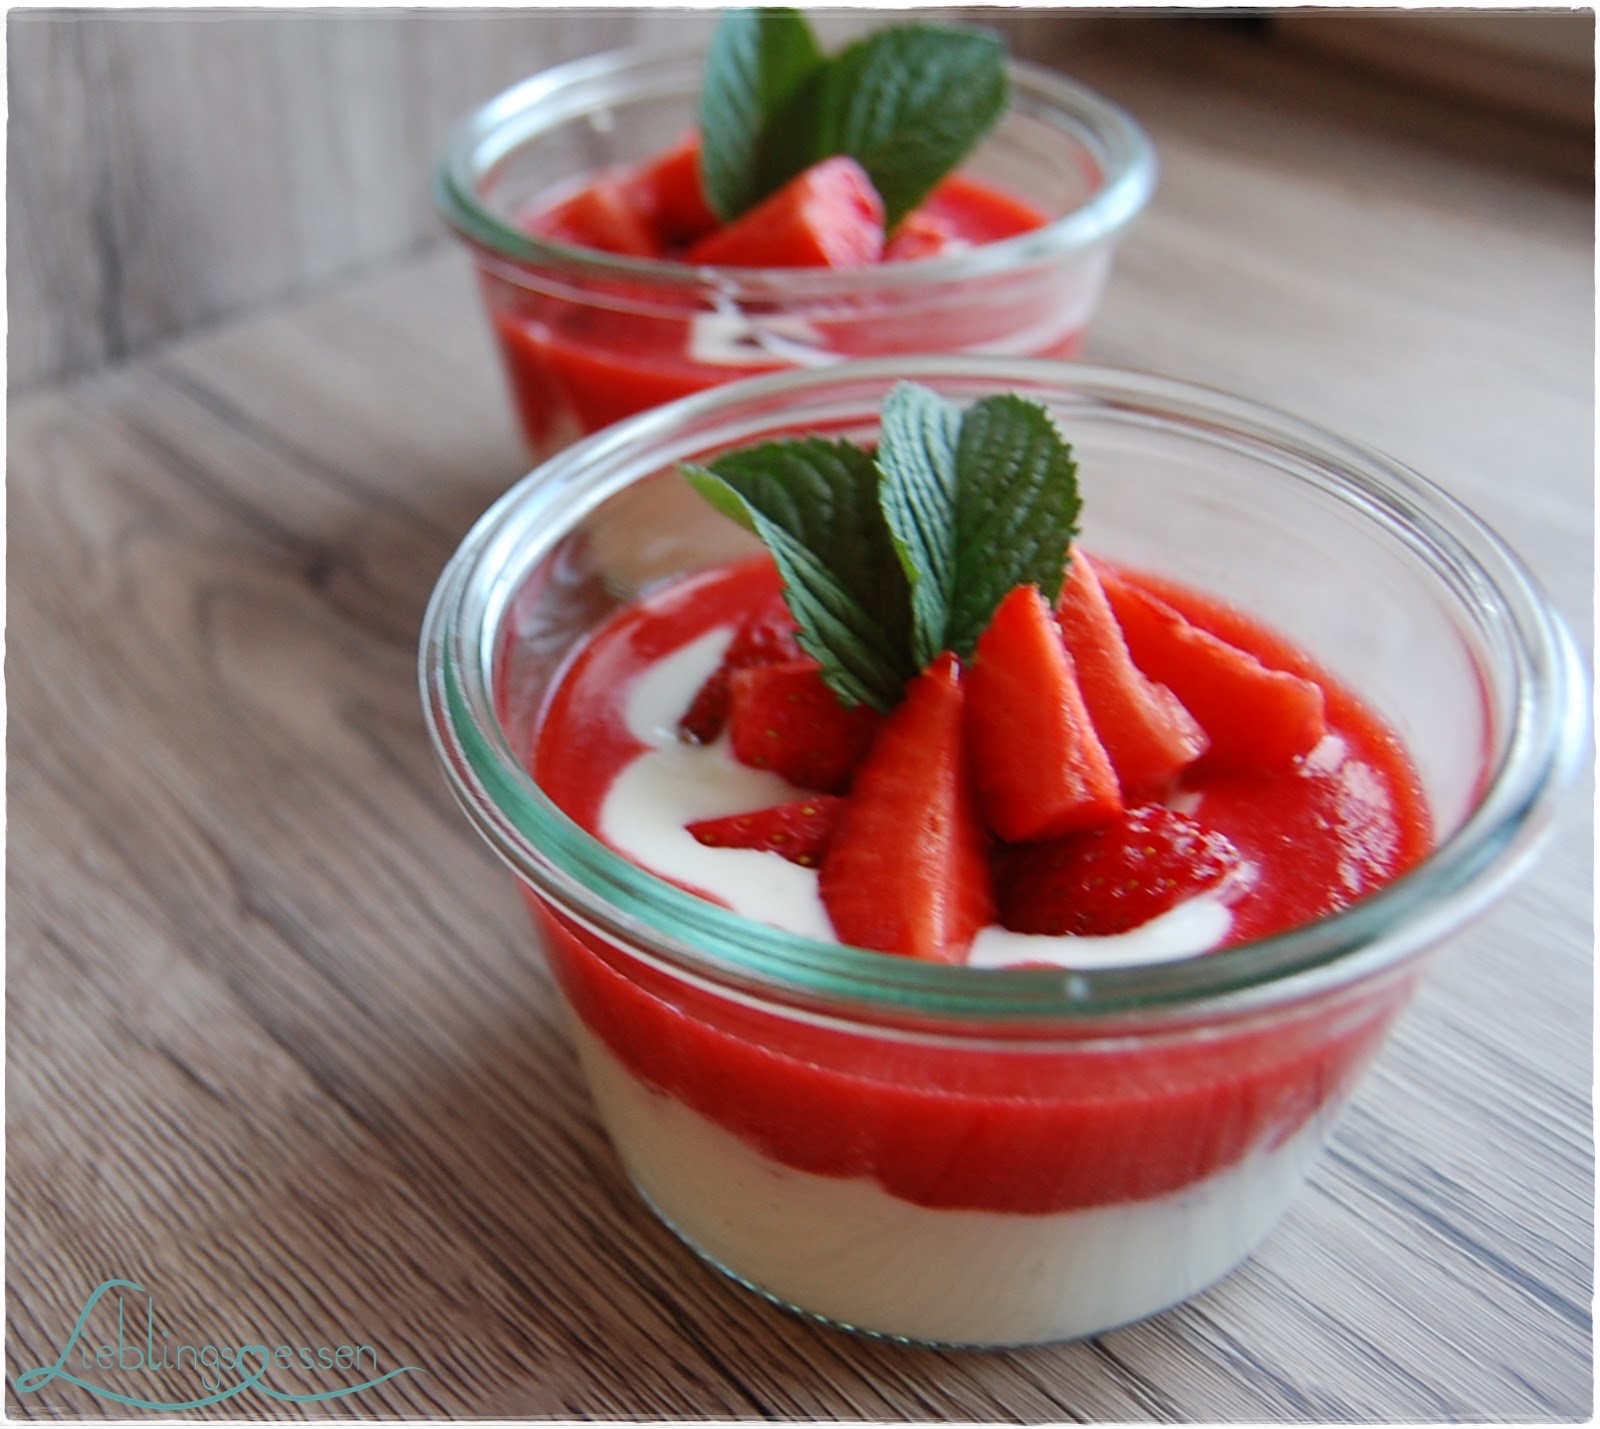 Lieblingsessen: Erdbeer Dessert